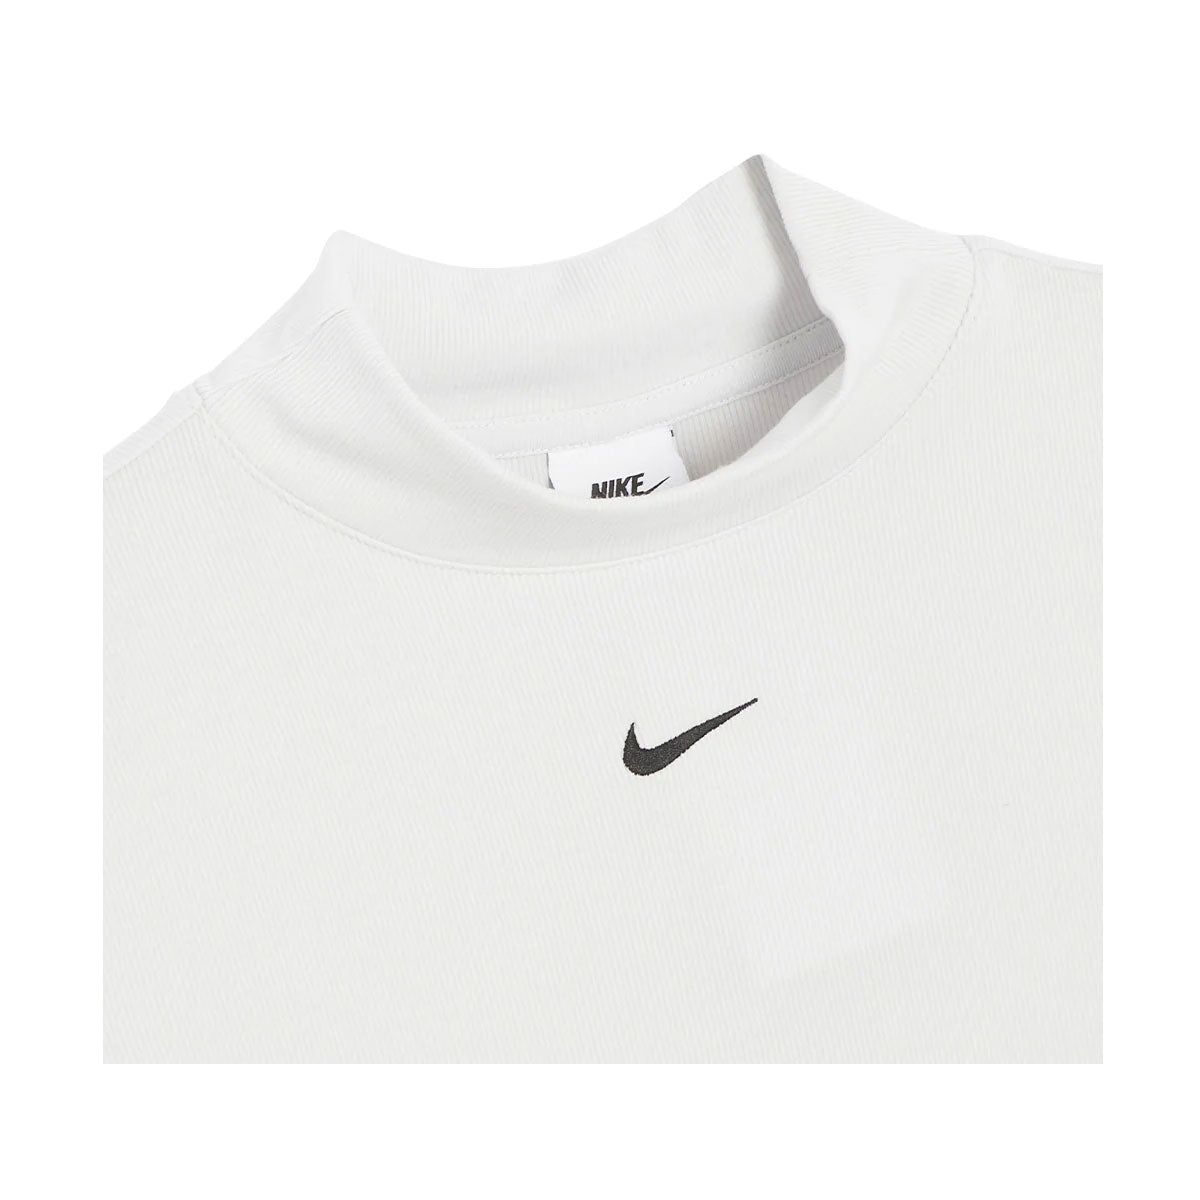 Nike Women's Ribbed Mock-Neck Long Sleeve Top